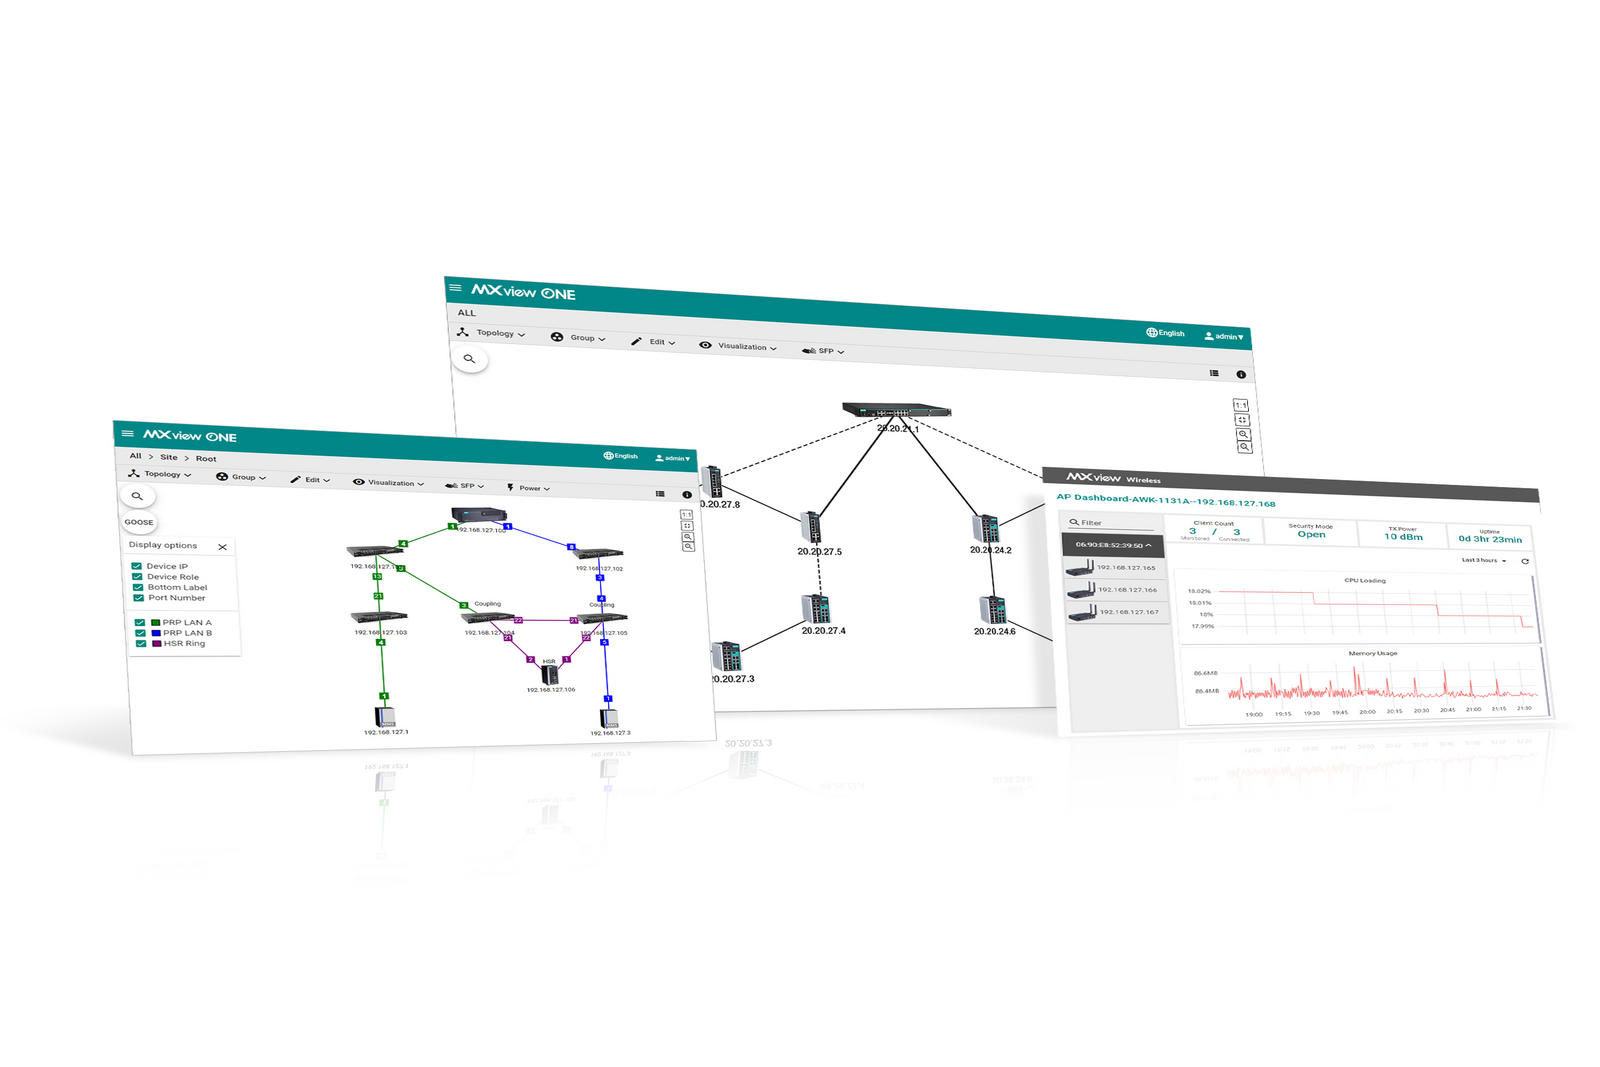 MXview One Series Next-generation industrial network management platform